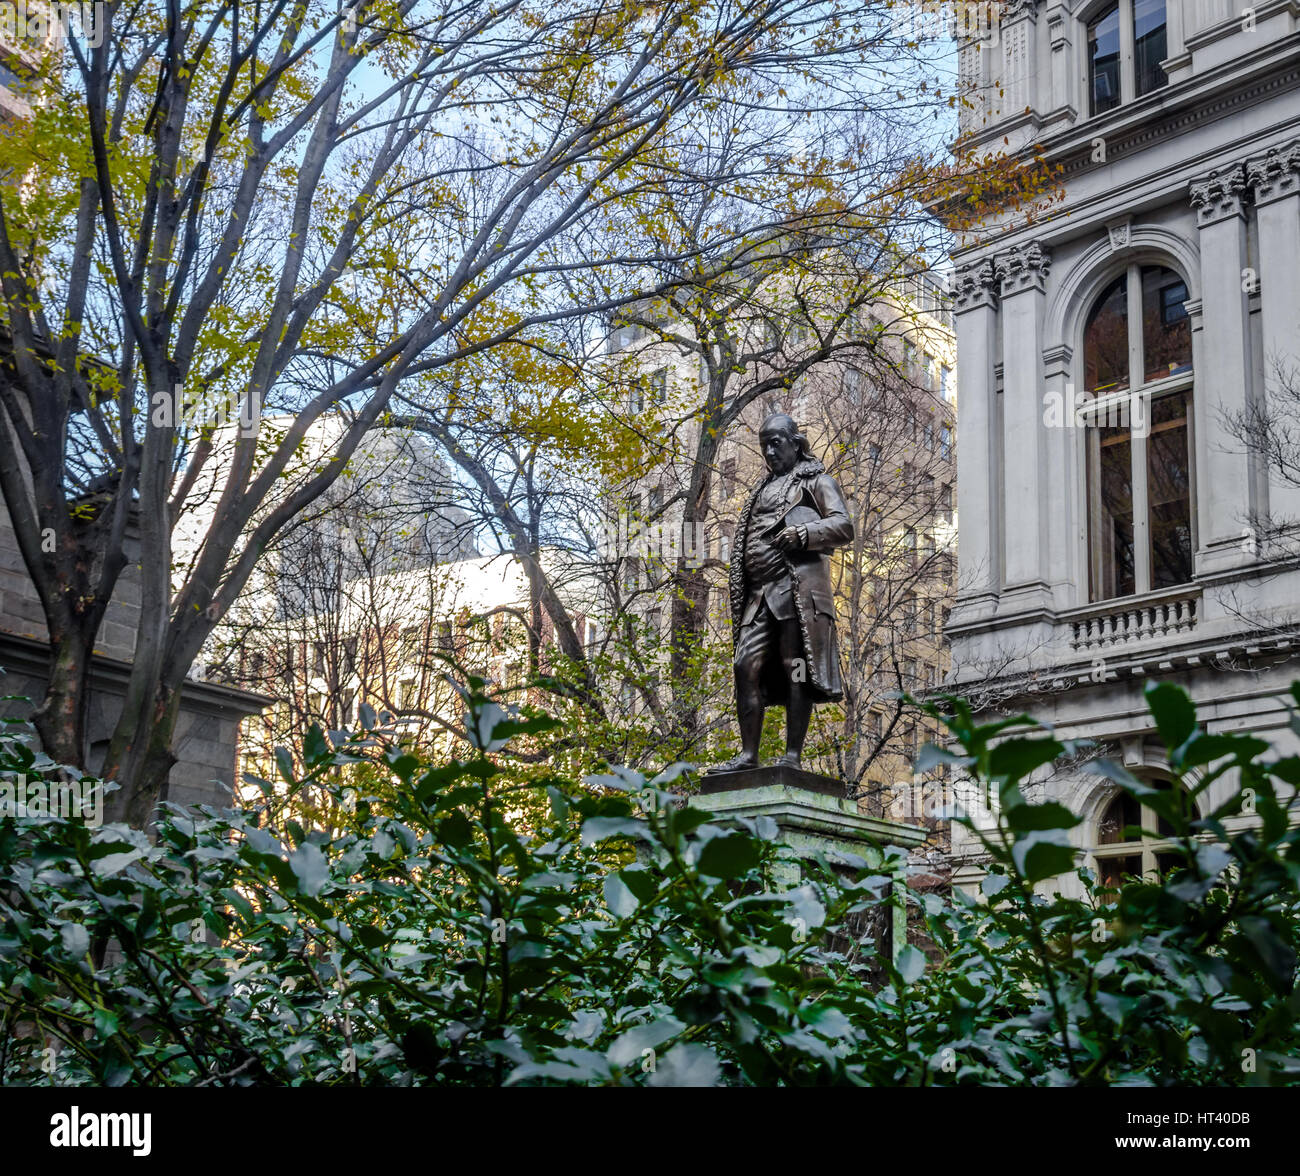 Benjamin Franklin Statue at Old City Hall - Boston, Massachusetts, USA Stock Photo